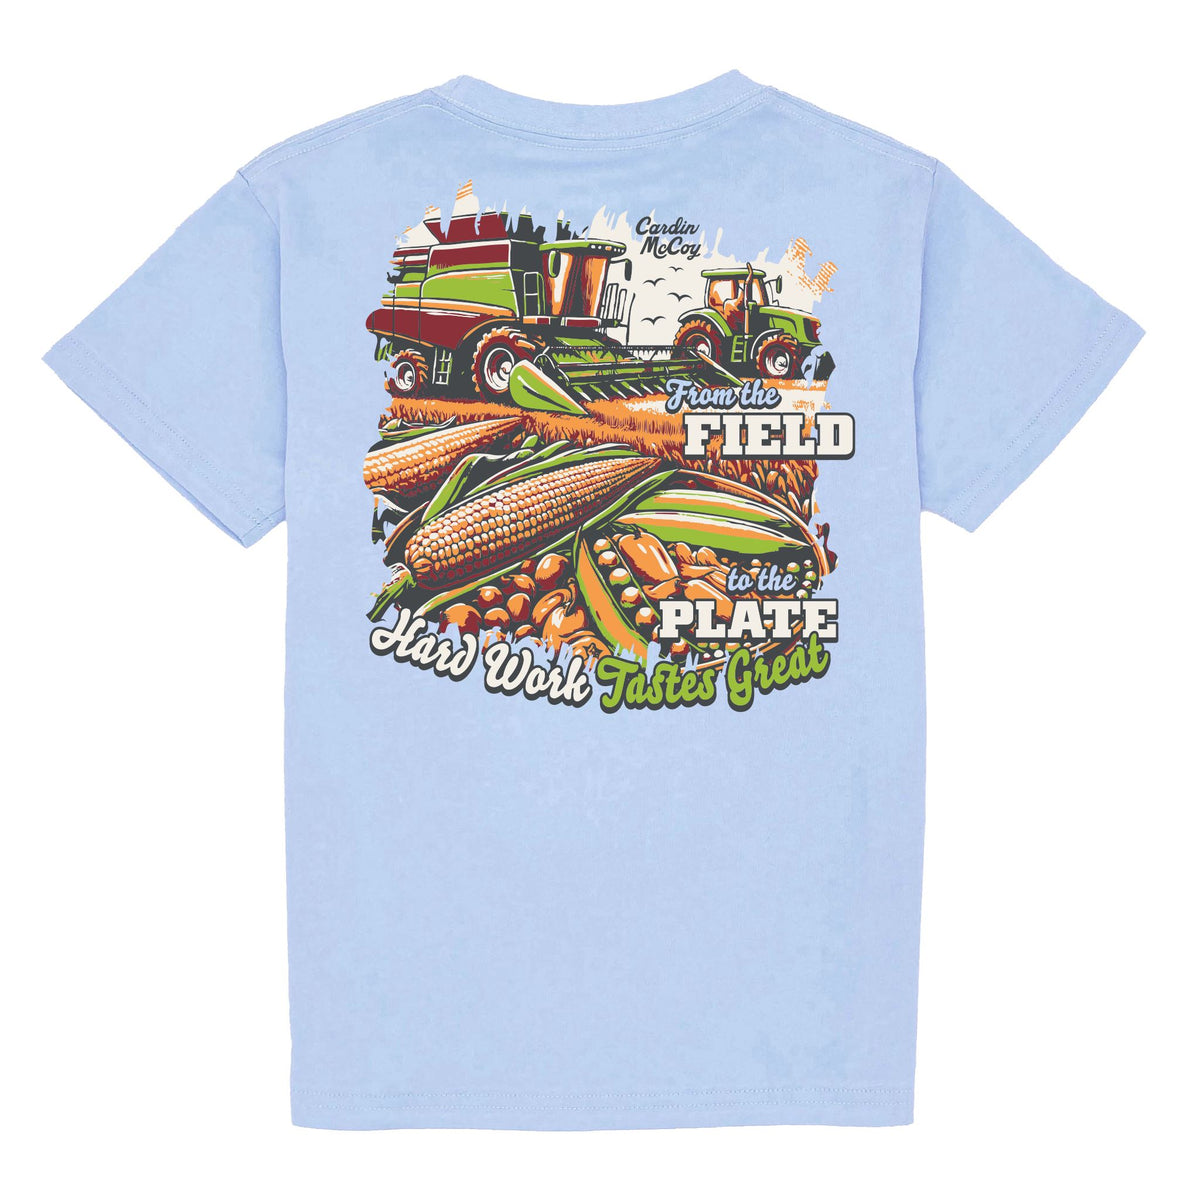 Kids' From the Field Short Sleeve Tee Short Sleeve T-Shirt Cardin McCoy Light Blue XXS (2/3) No Pocket